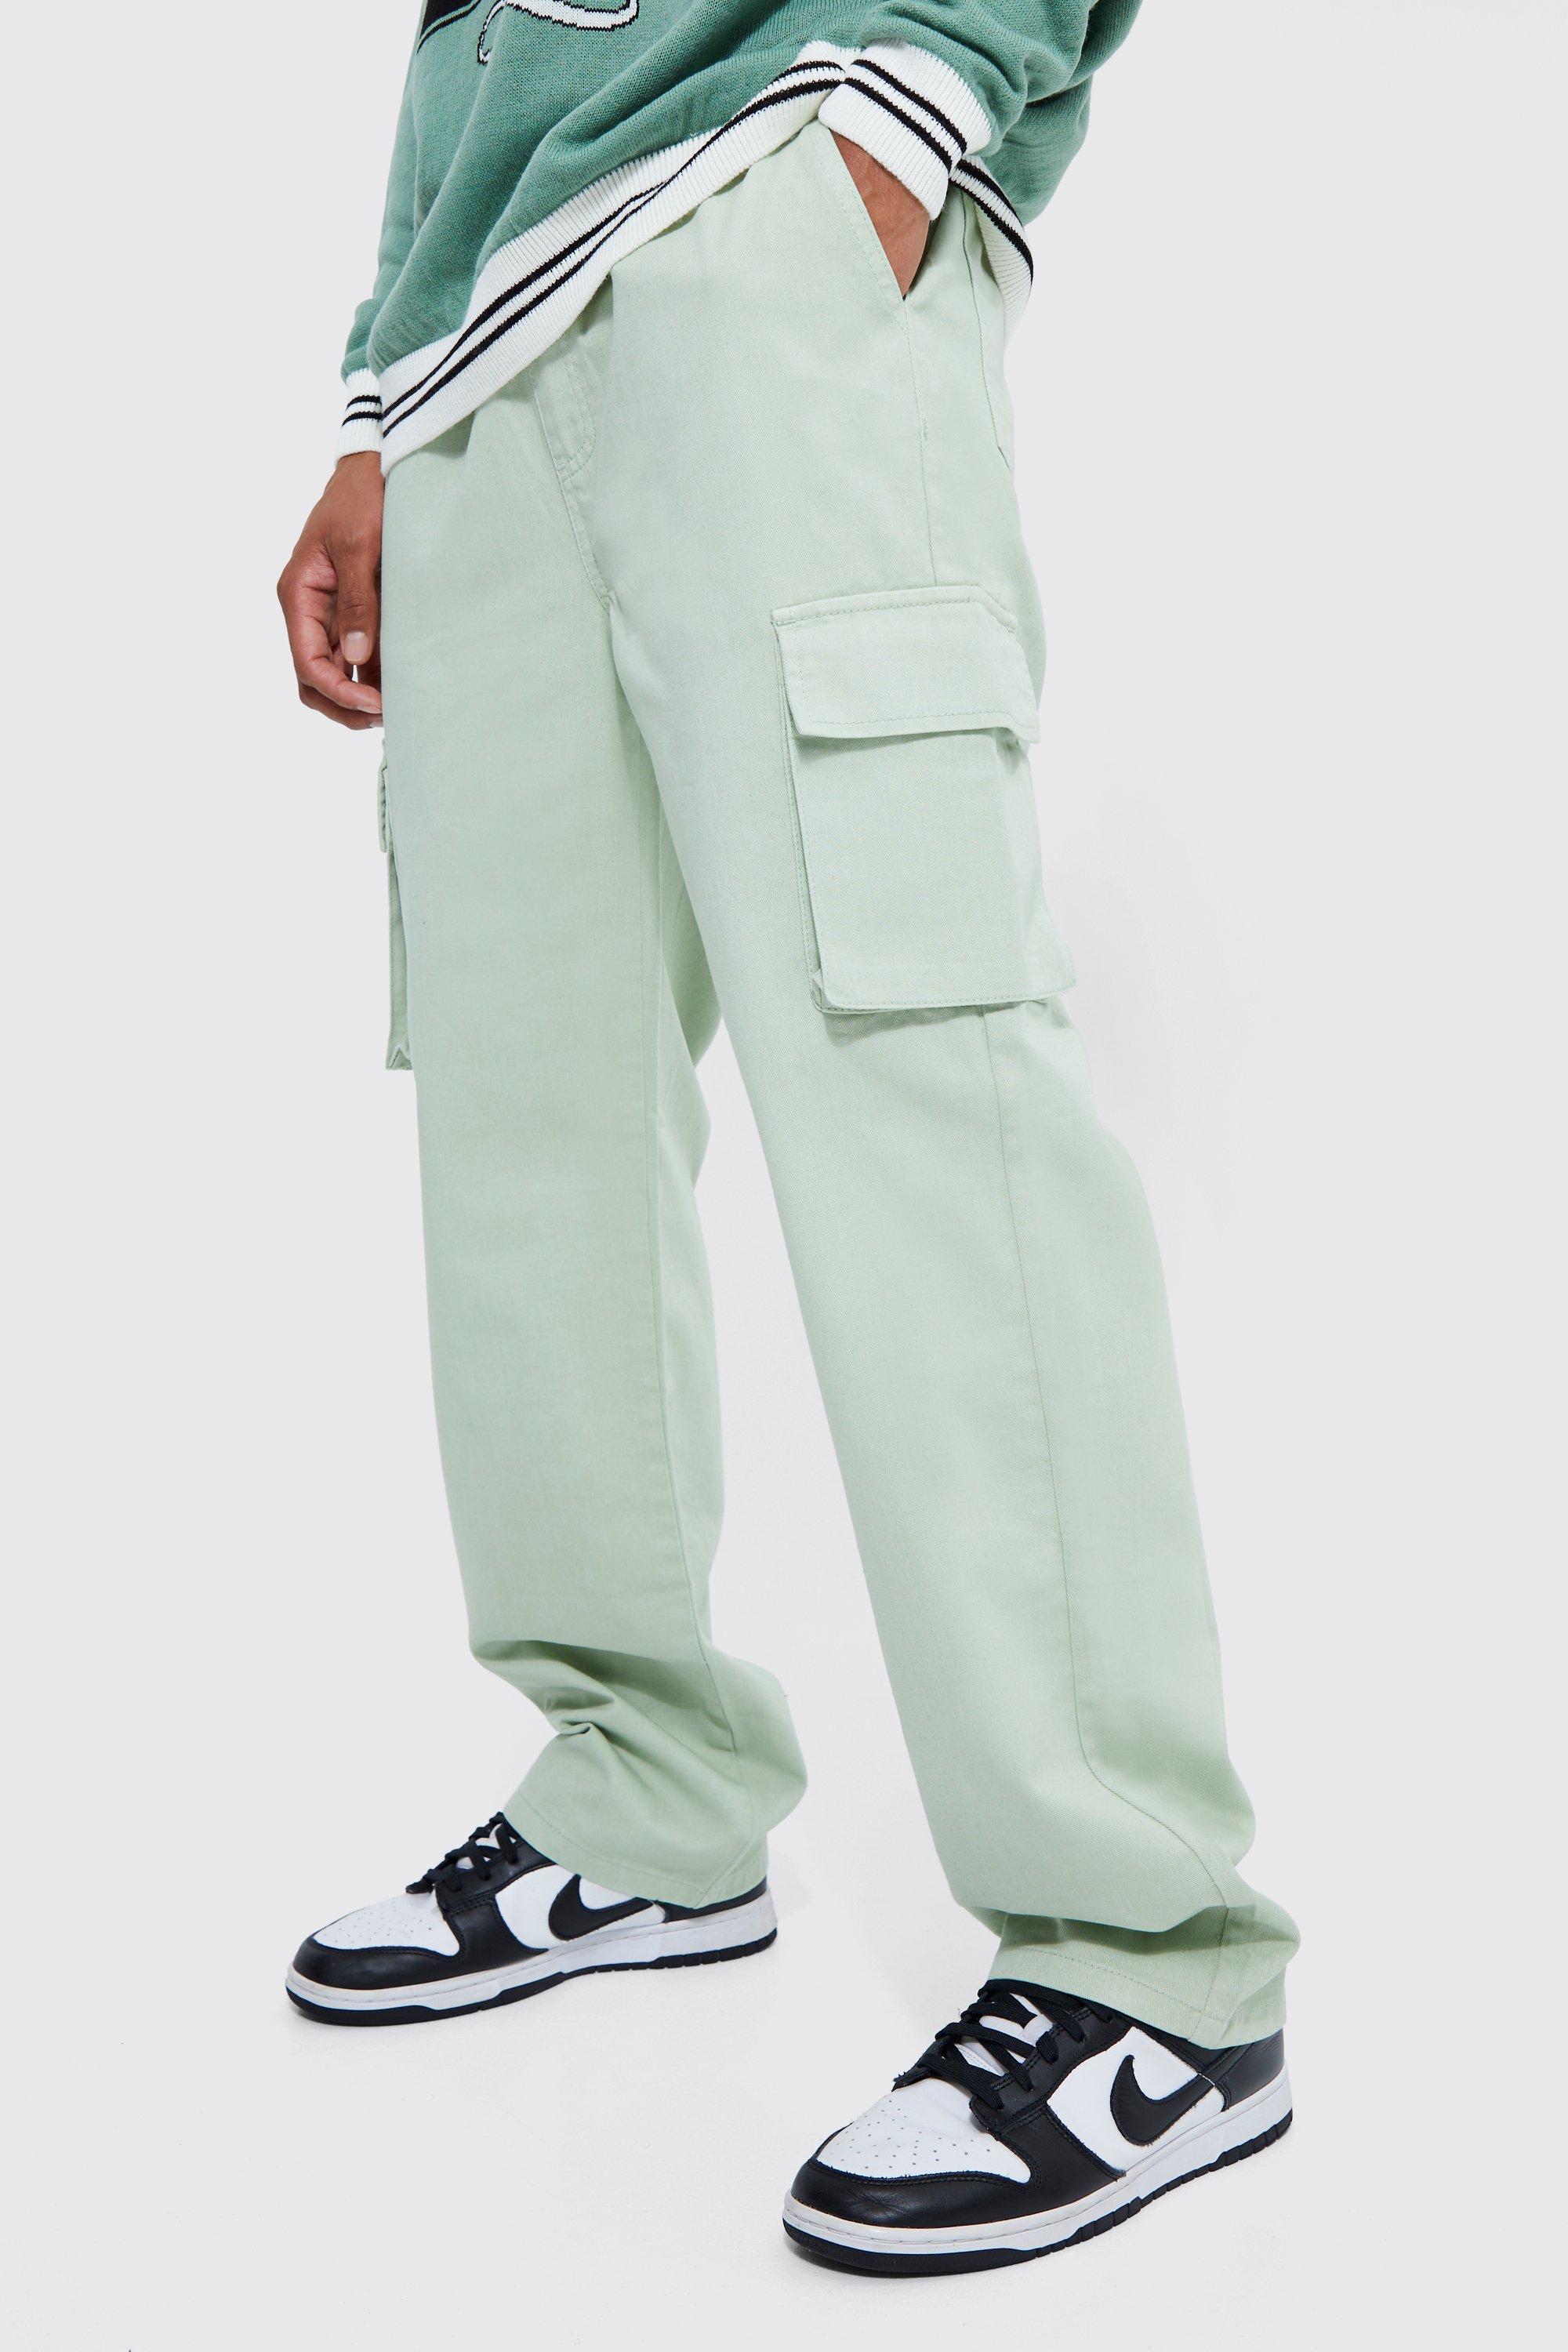 pantalon chino cargo homme - vert - s, vert